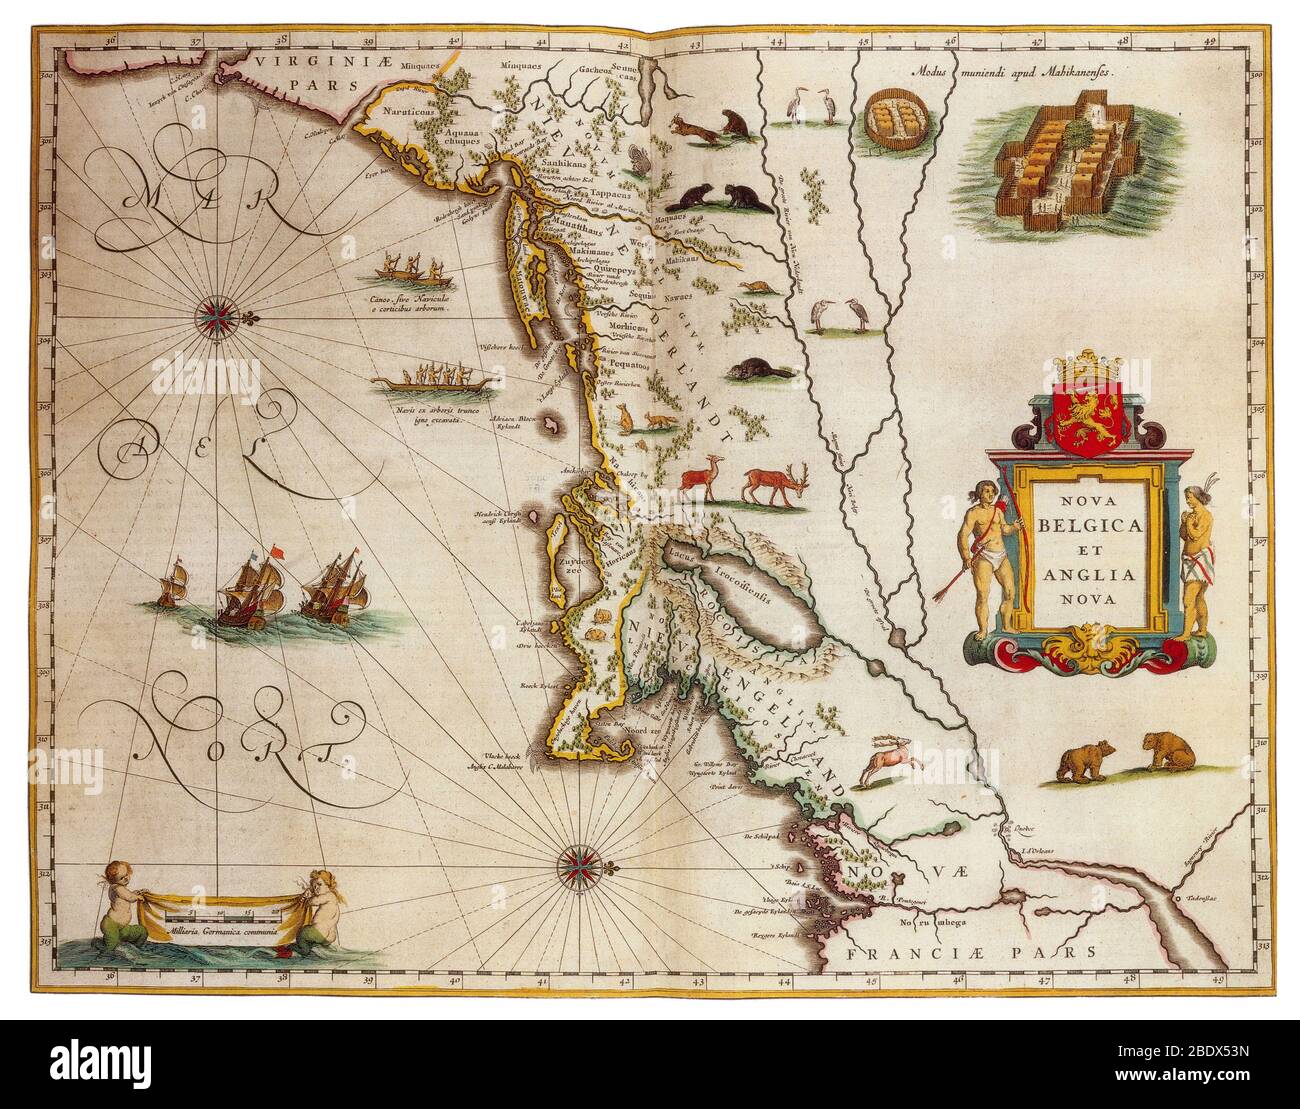 Joan Blaeu, Nova Belgica e Nova Anglia Map, XVII secolo Foto Stock